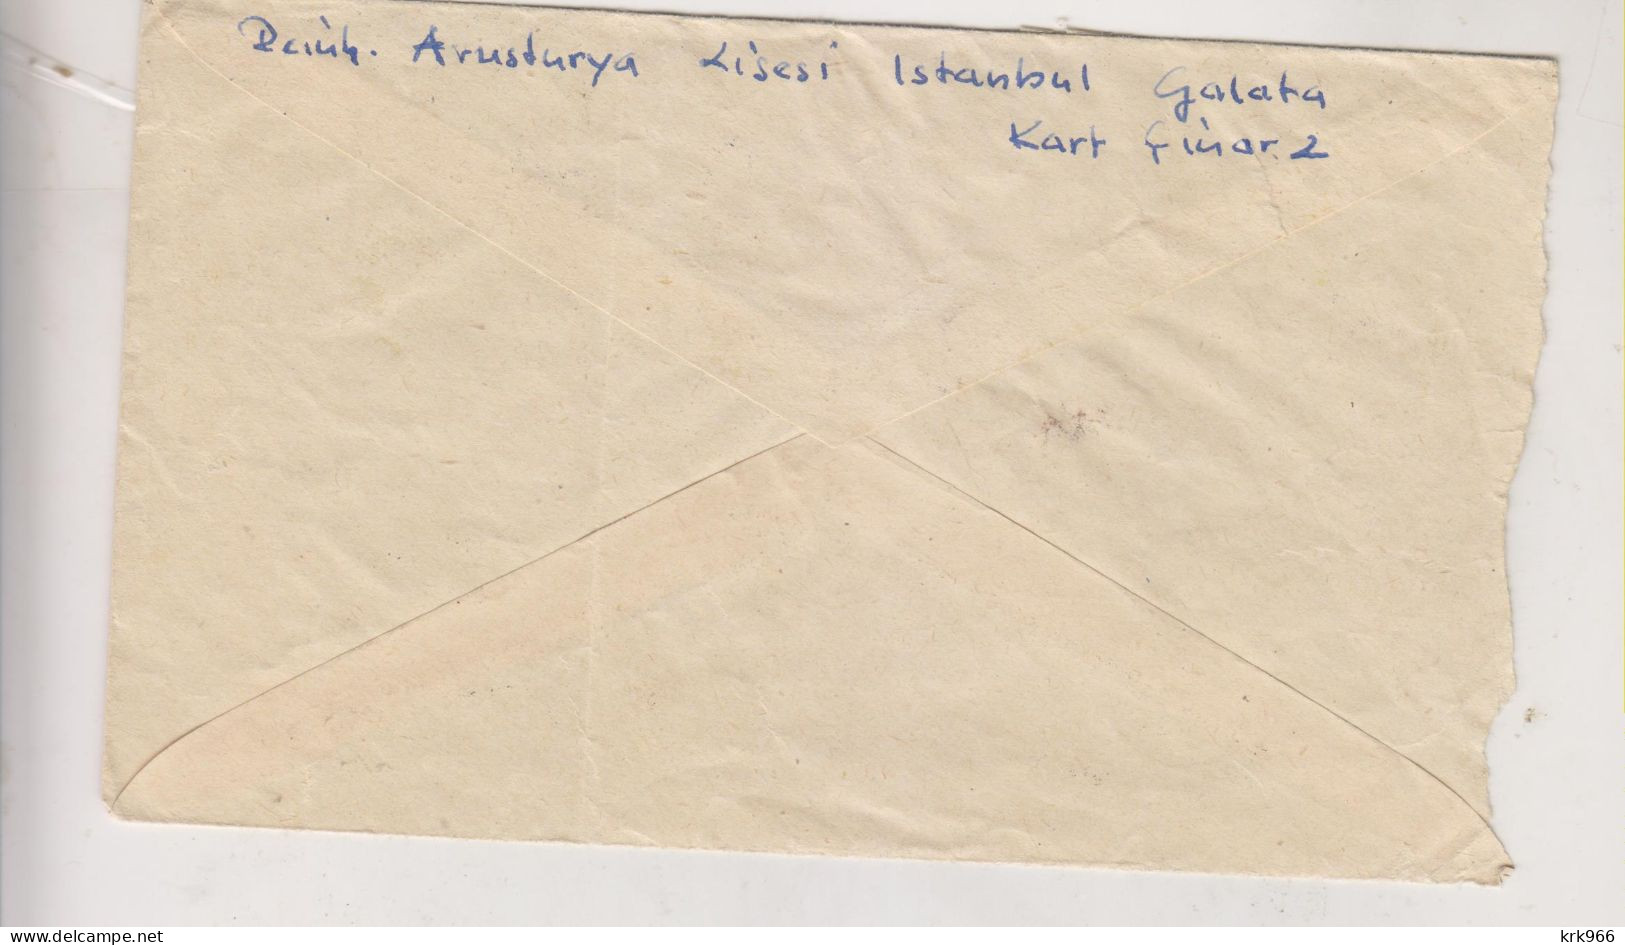 TURKEY 1959 ISTANBUL GALATA Nice Airmail Cover To Austria - Briefe U. Dokumente